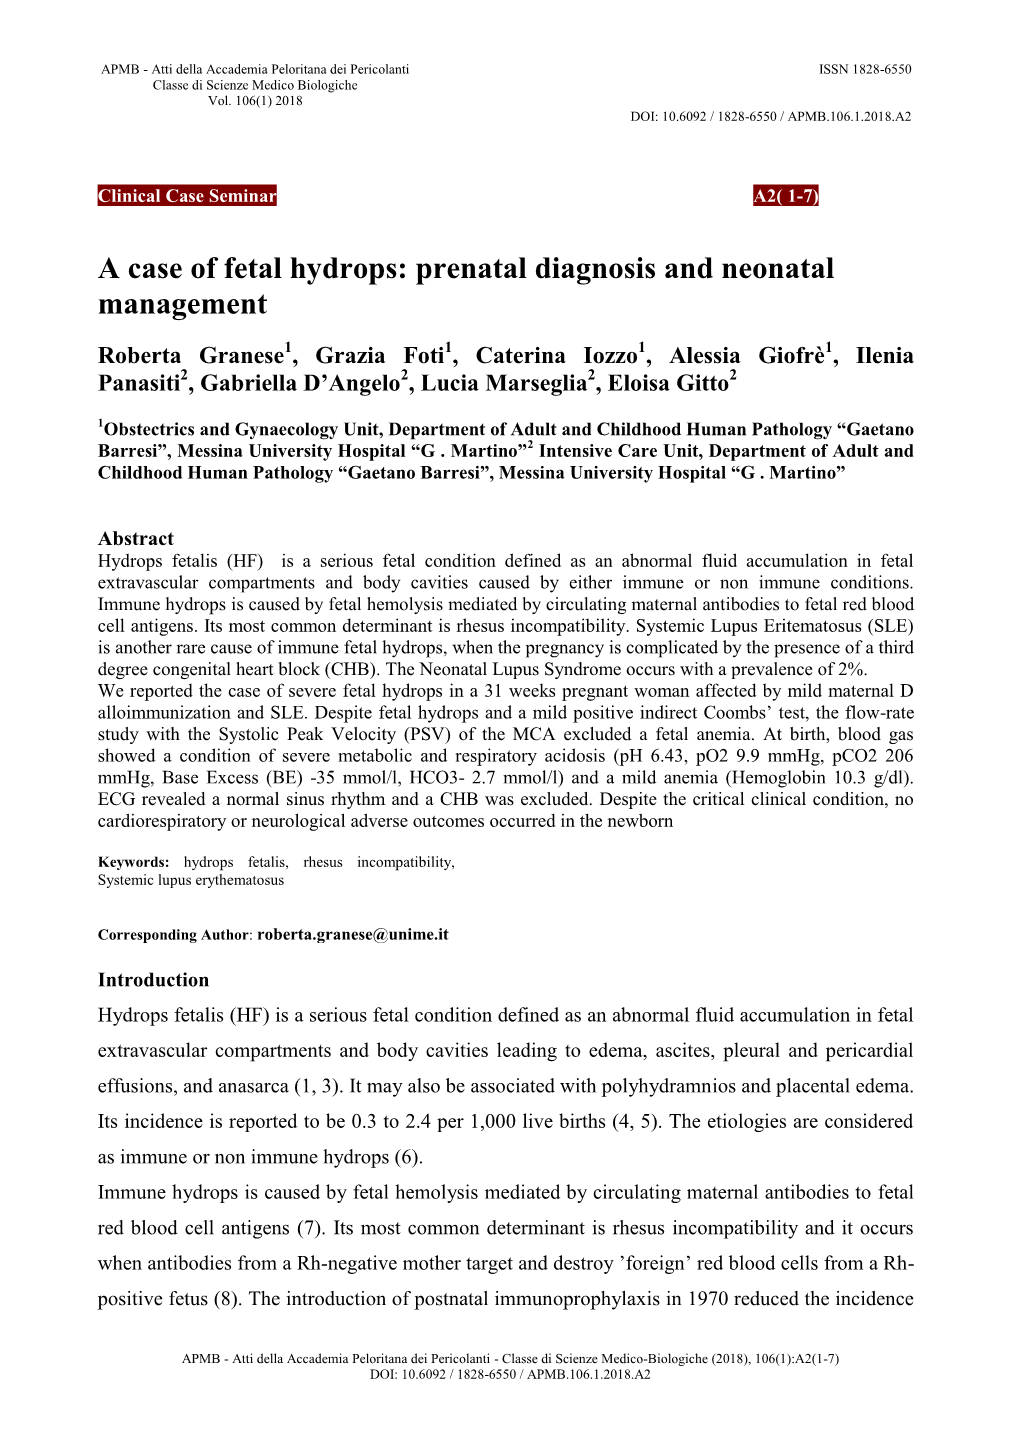 A Case of Fetal Hydrops